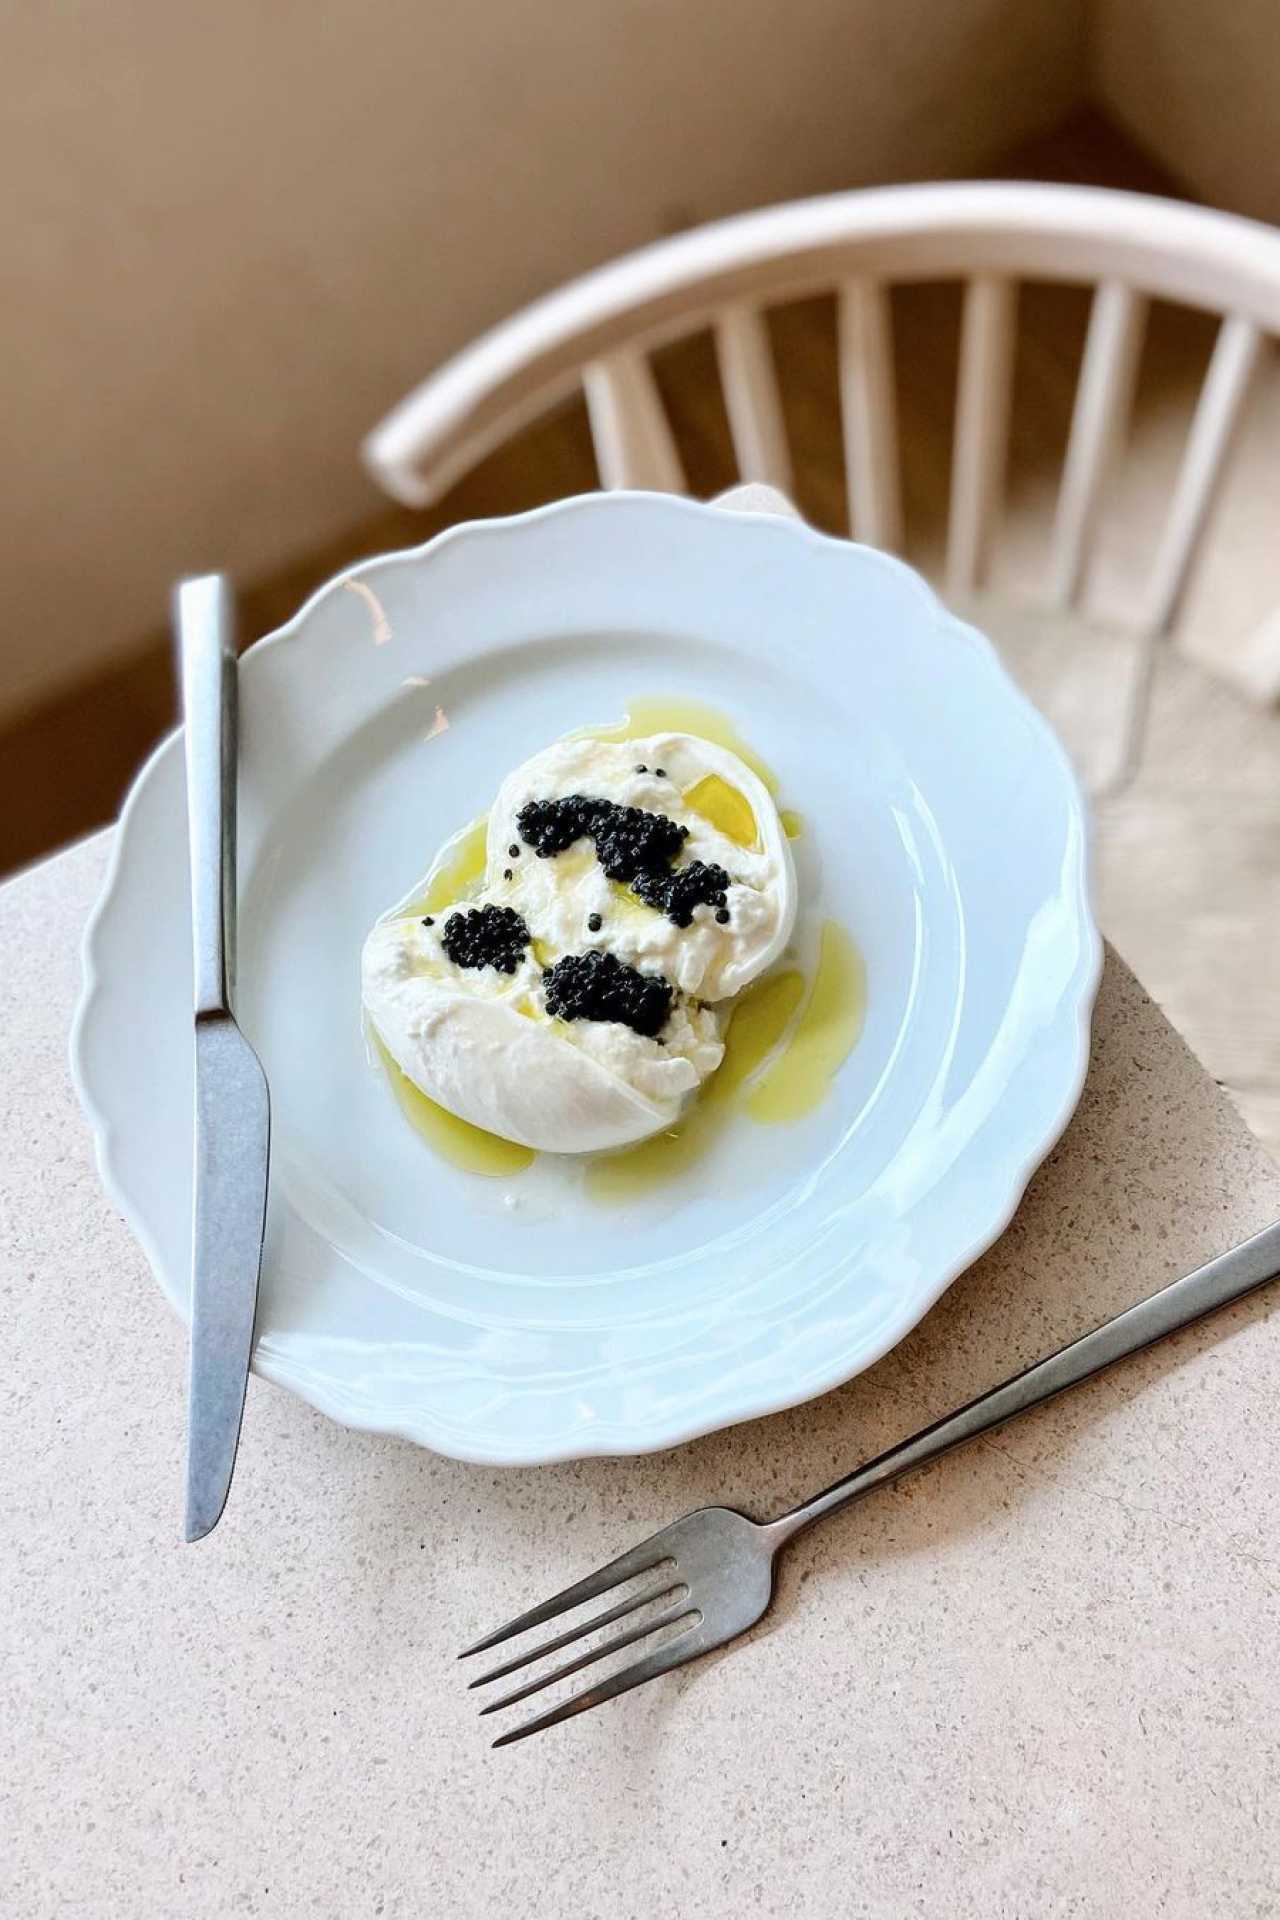 At Osteria Giulia, the Burrata a Caviale incorporates caviar